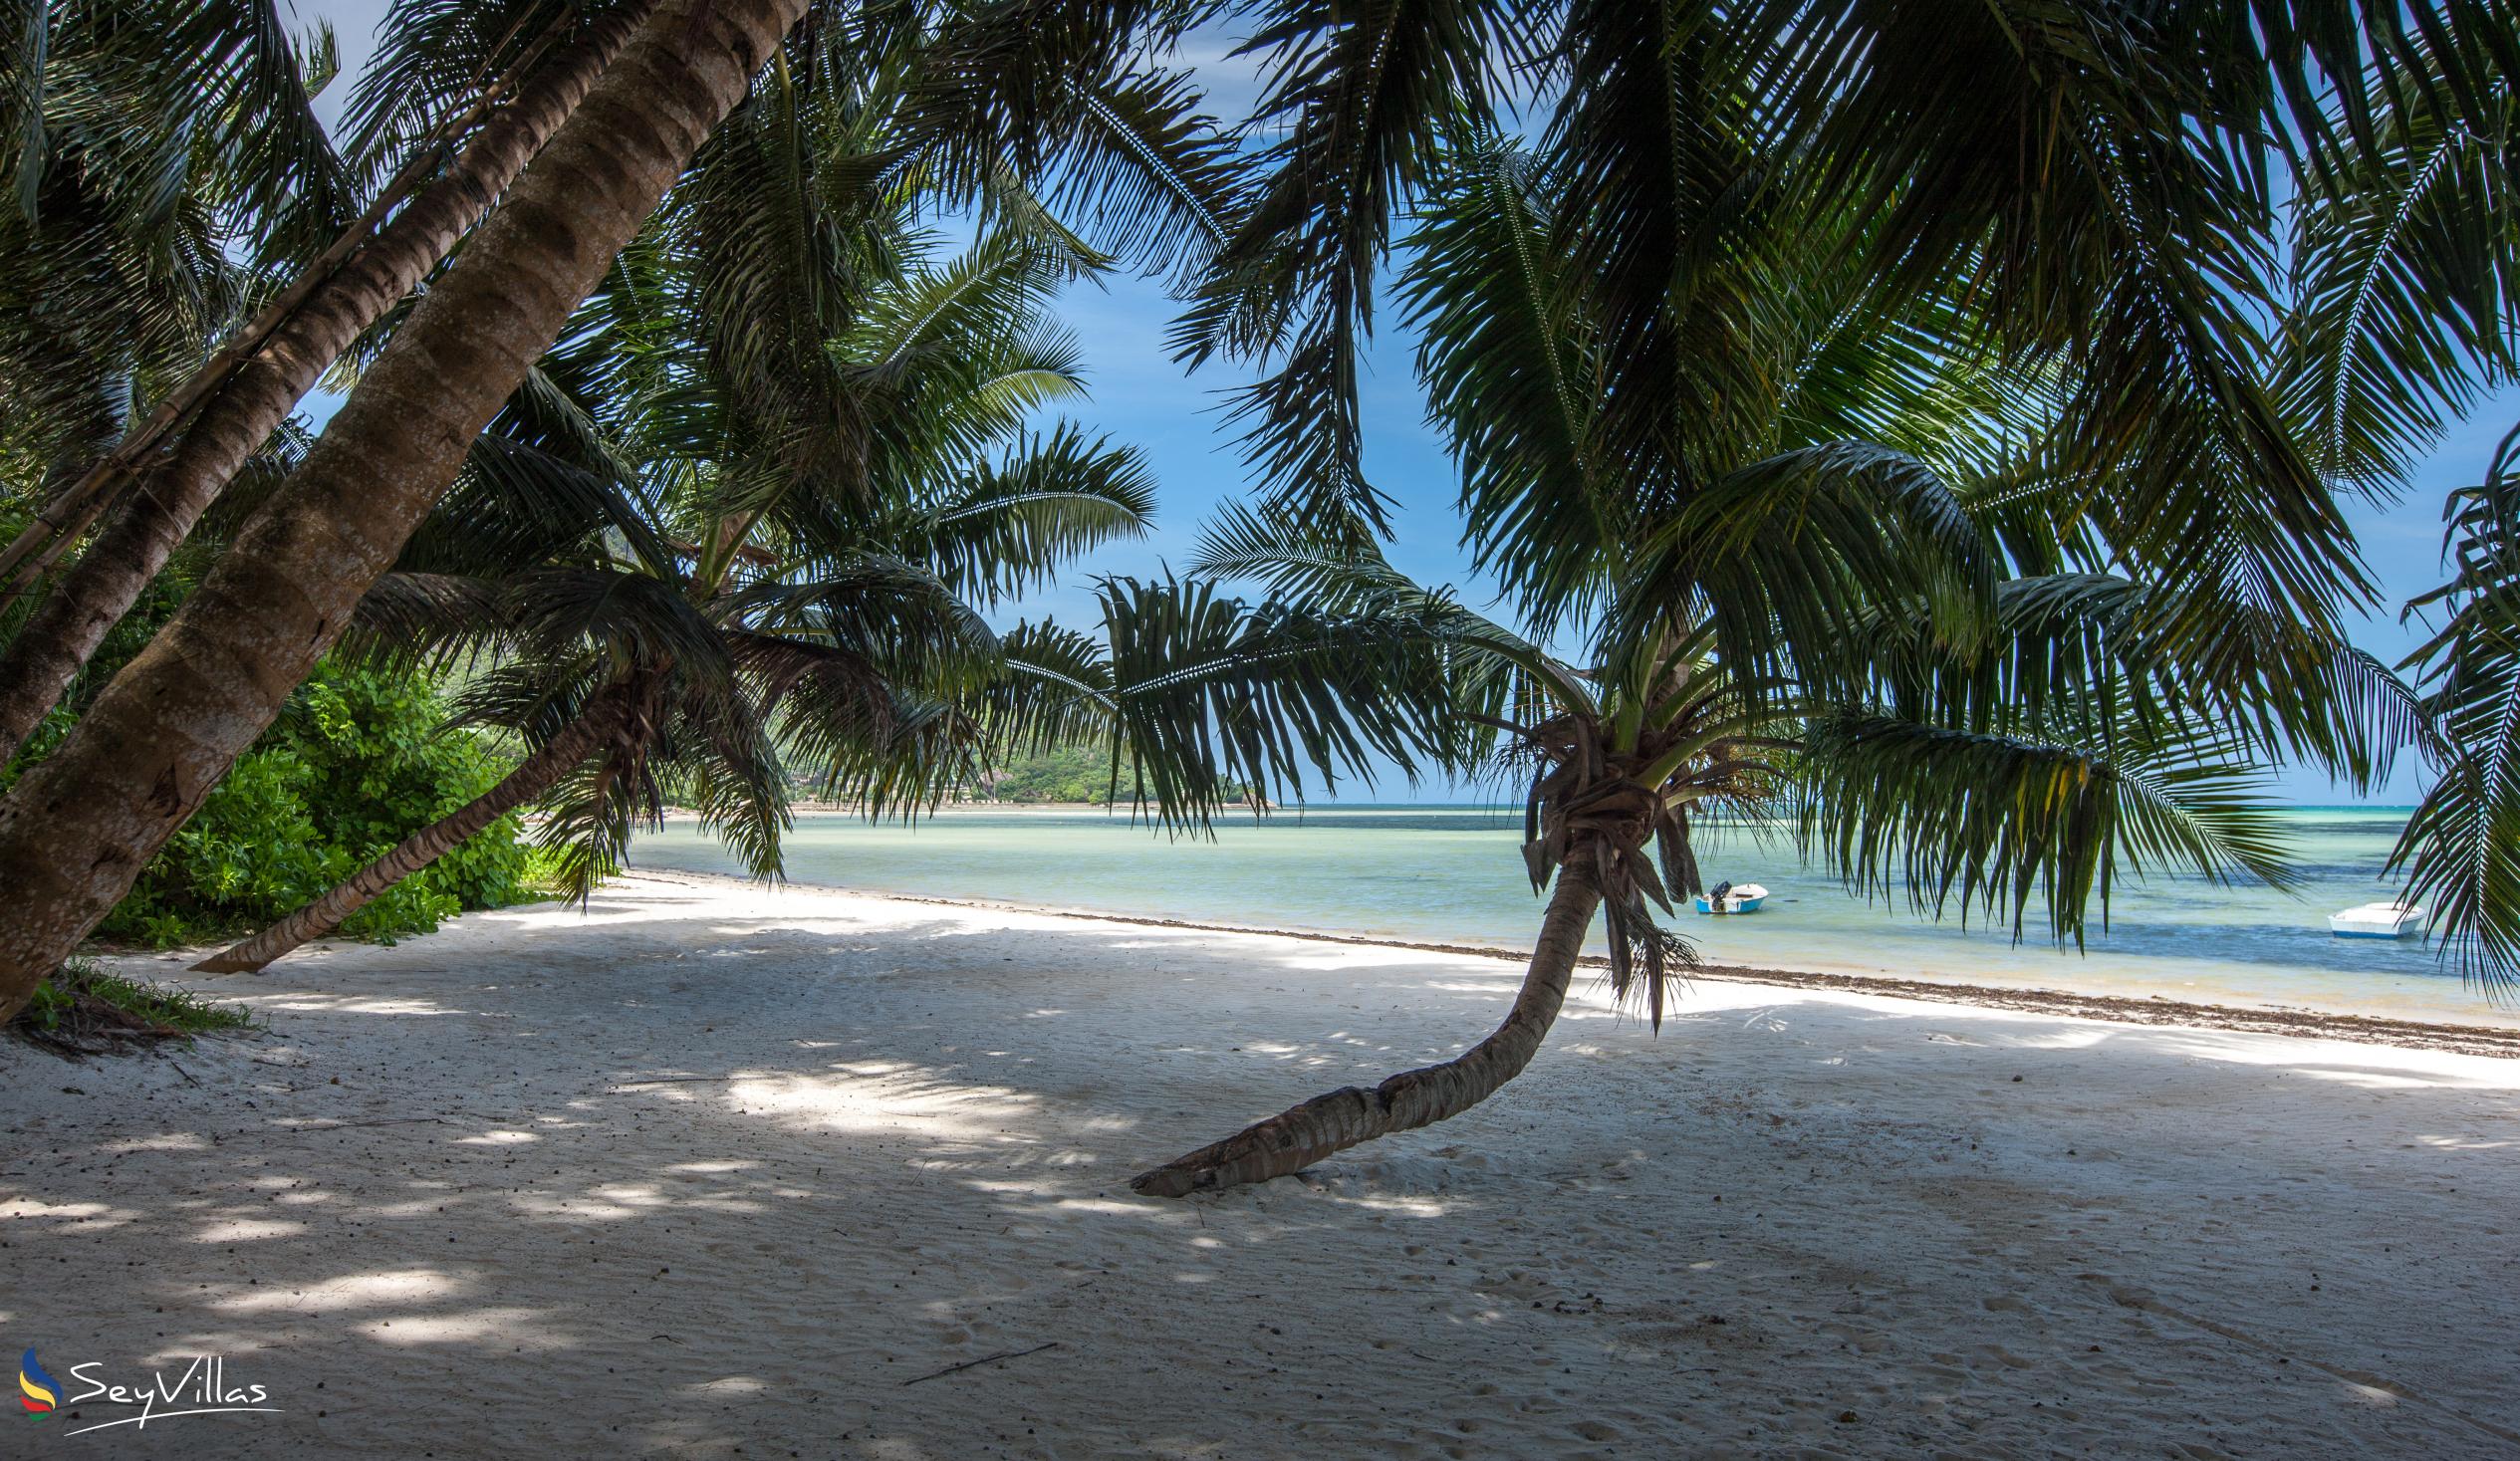 Photo 70: Le Relax Beach Resort - Beaches - Praslin (Seychelles)